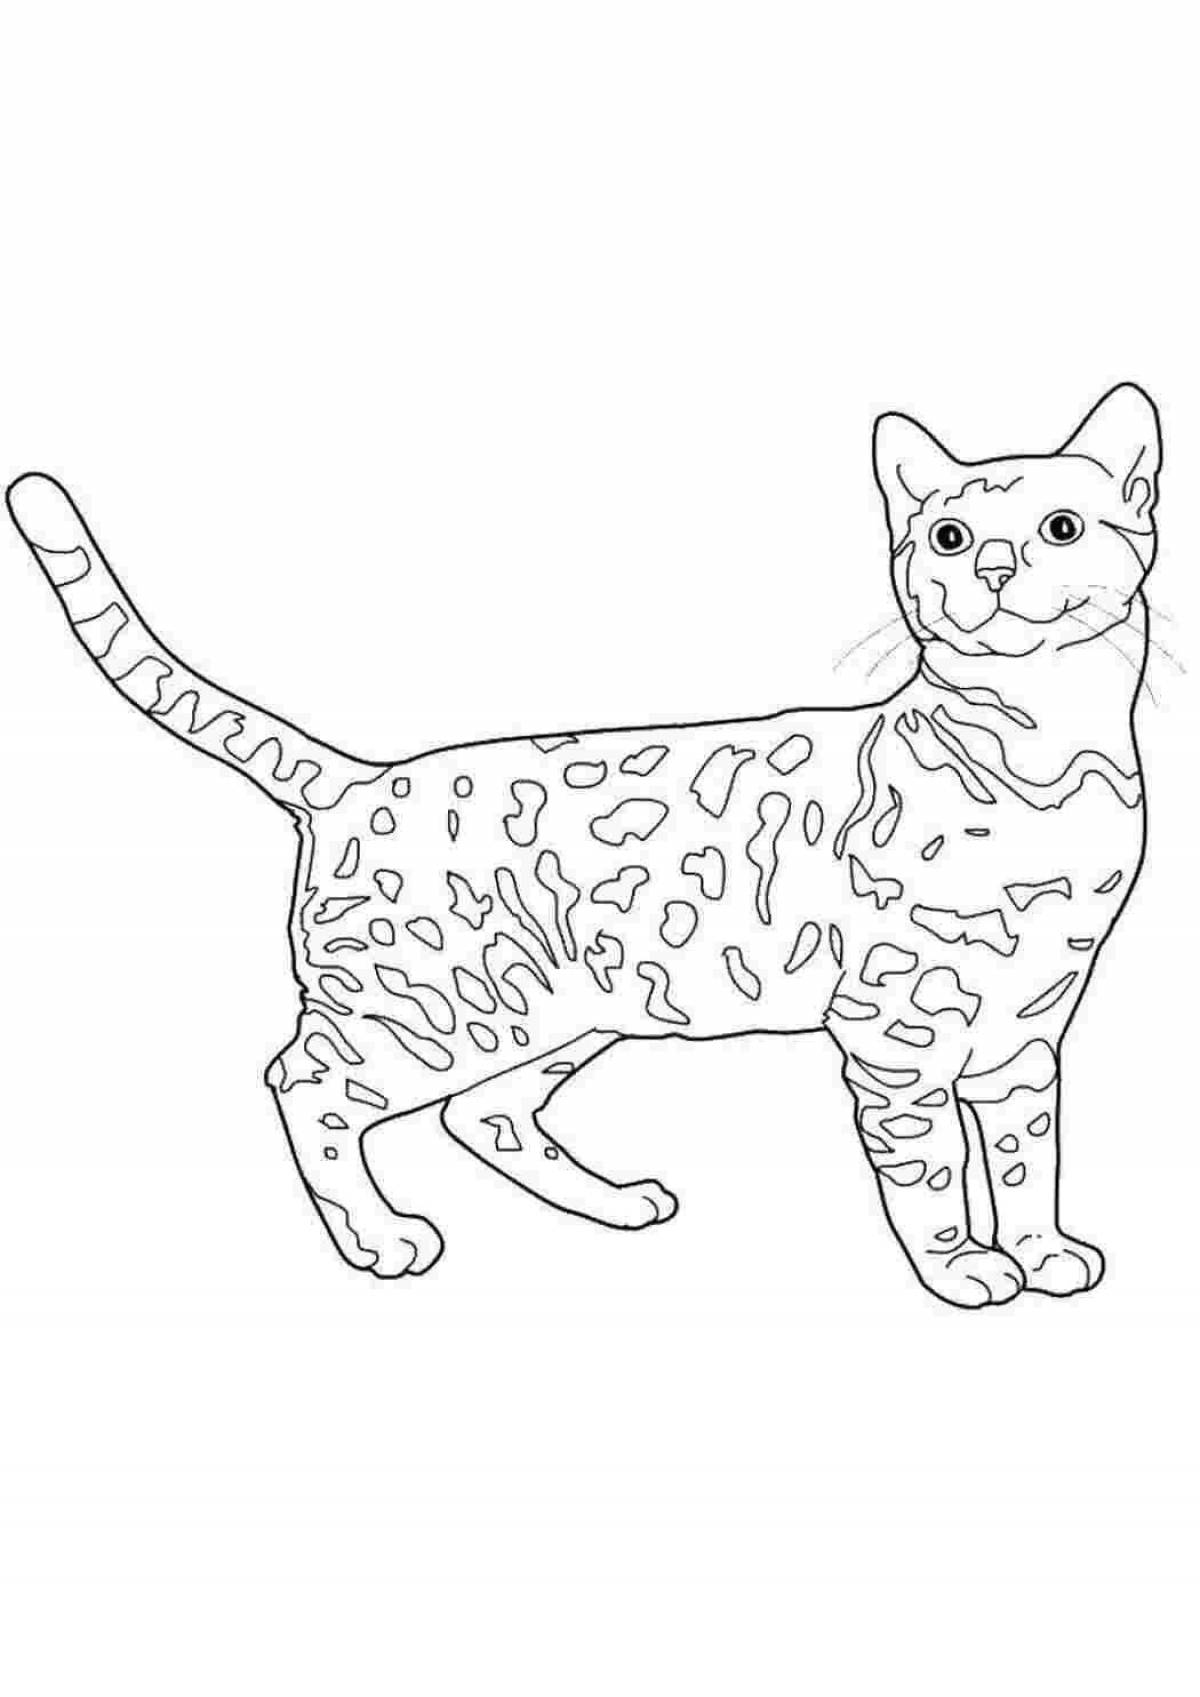 Cute pet cat coloring book